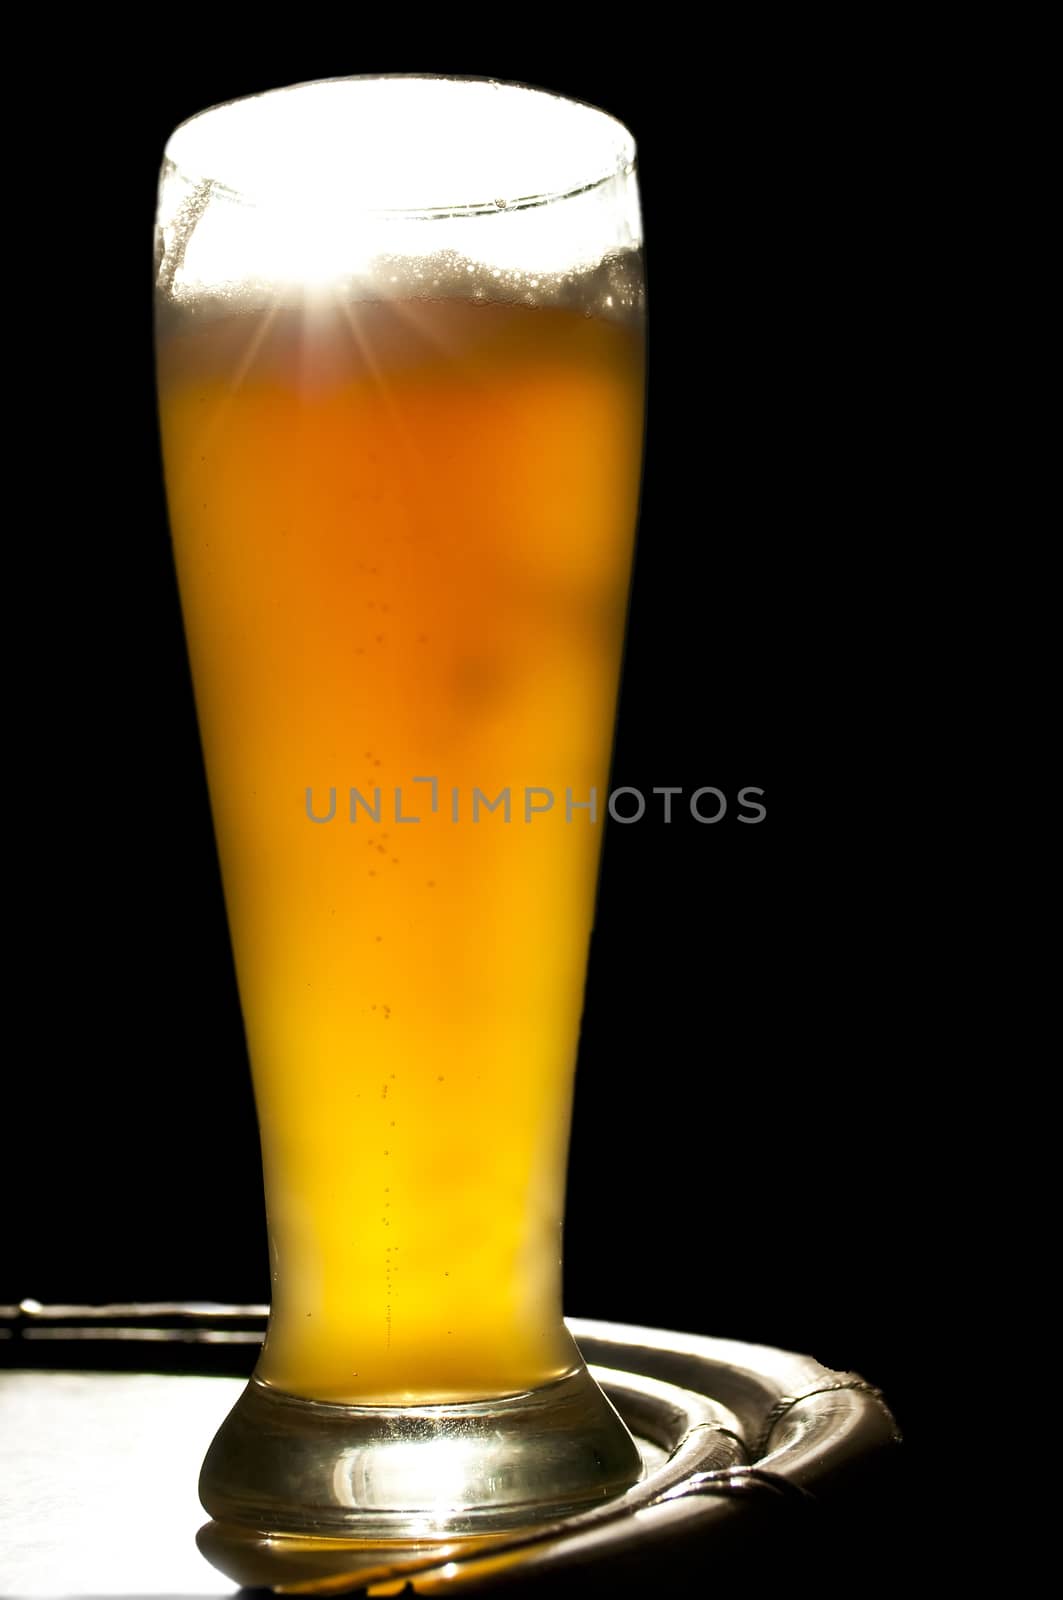 German wheat beer in afternoon sun